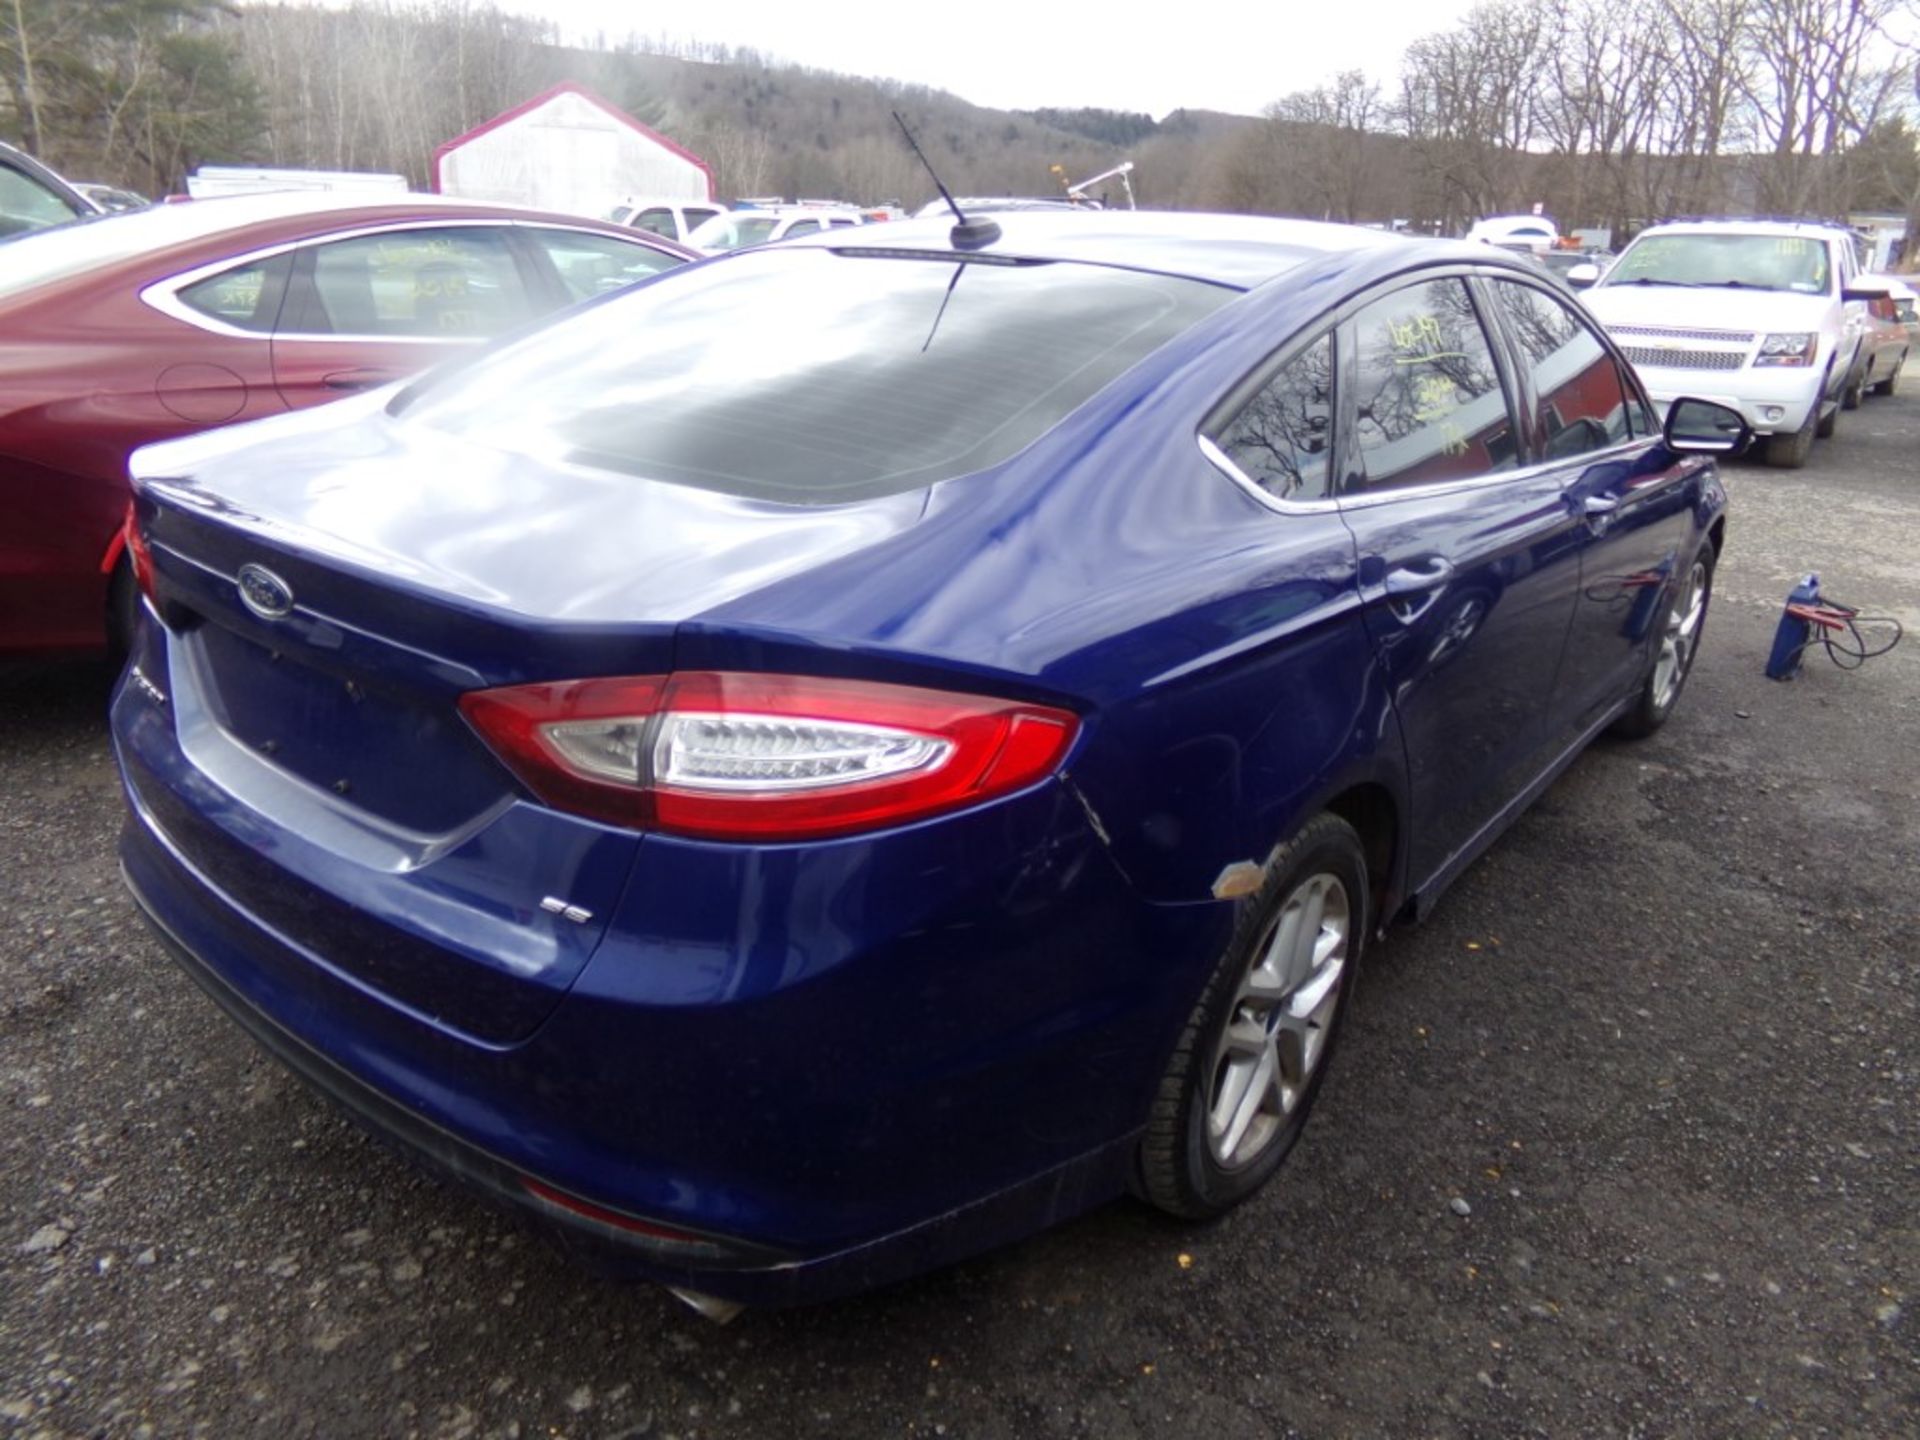 2014 Ford Fusion SE, Blue, 174,739 Miles, VIN#1FA6P0H7XE5365423, AIR BAG LIGHT IS ON, MINOR DAMAGE - Bild 5 aus 18